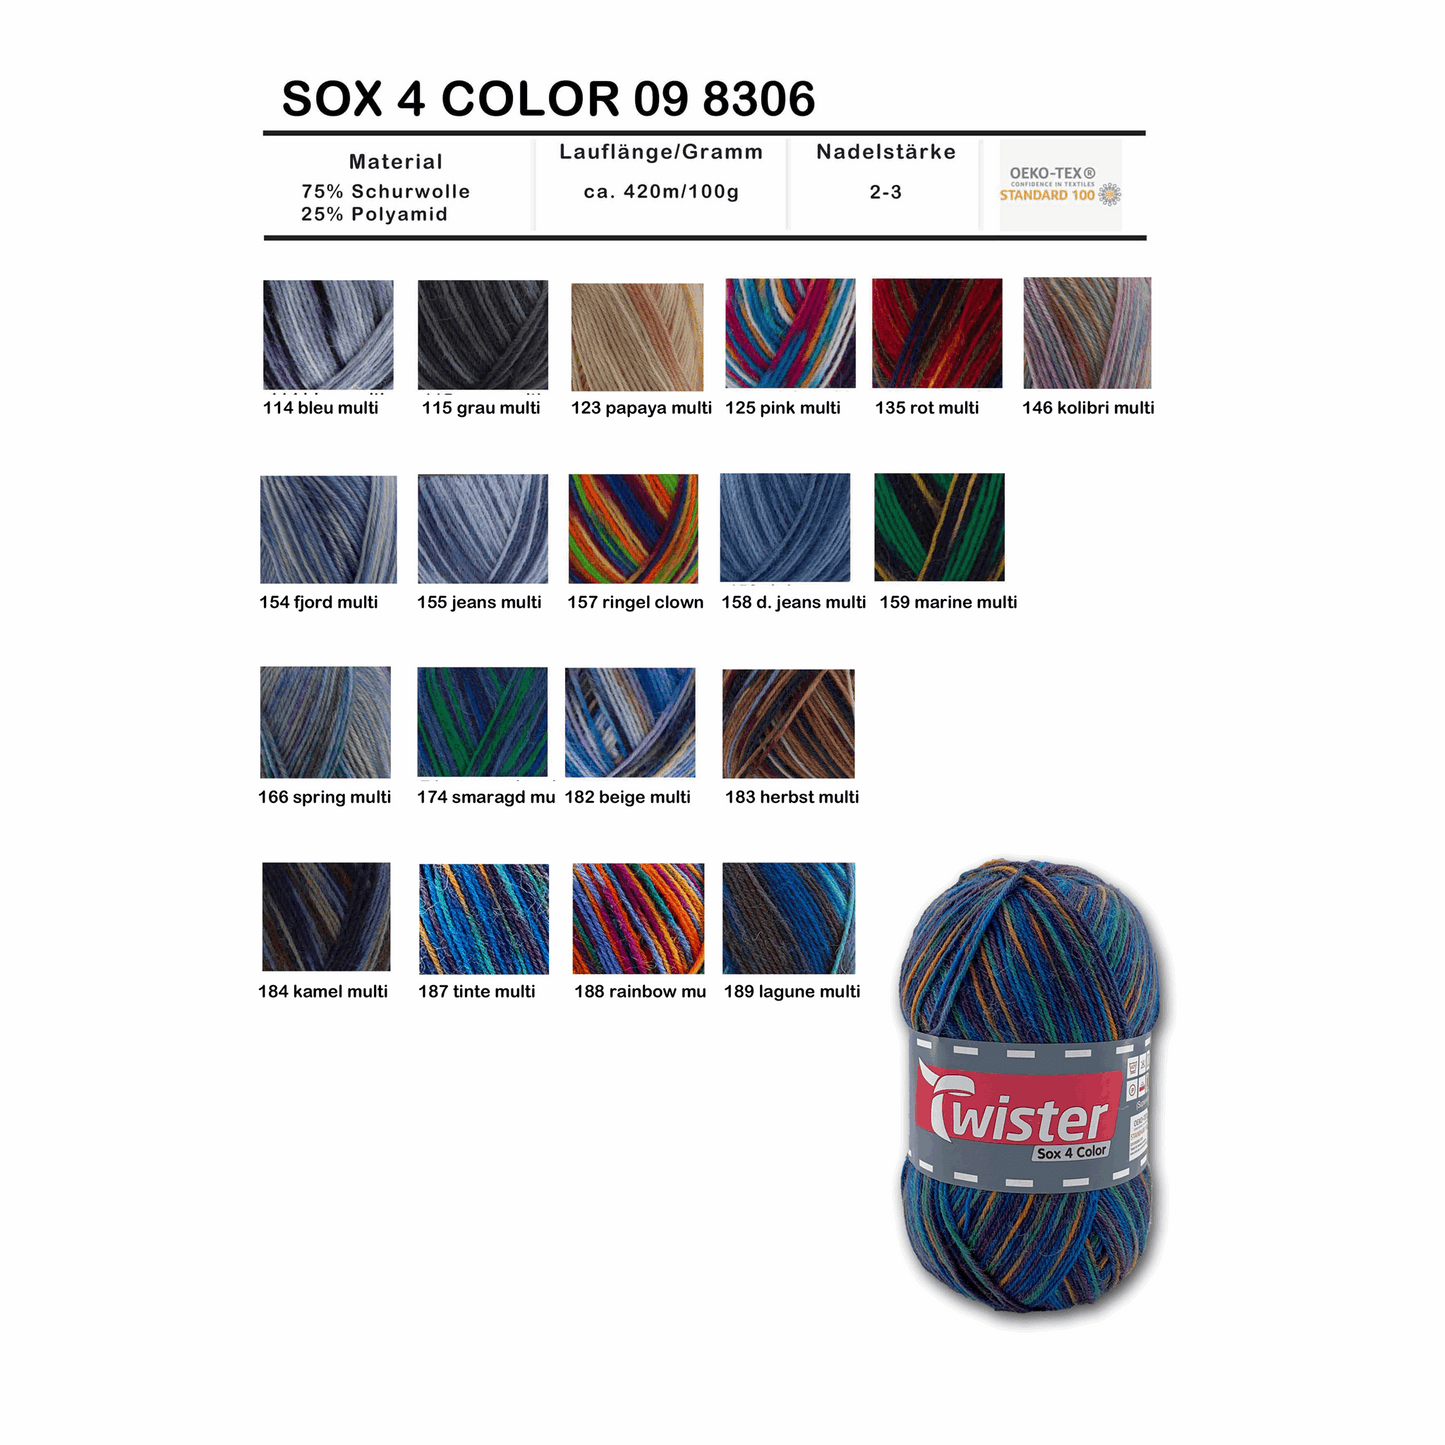 Twister Sox4 Color superwash, rot multi, 98306, Farbe 135